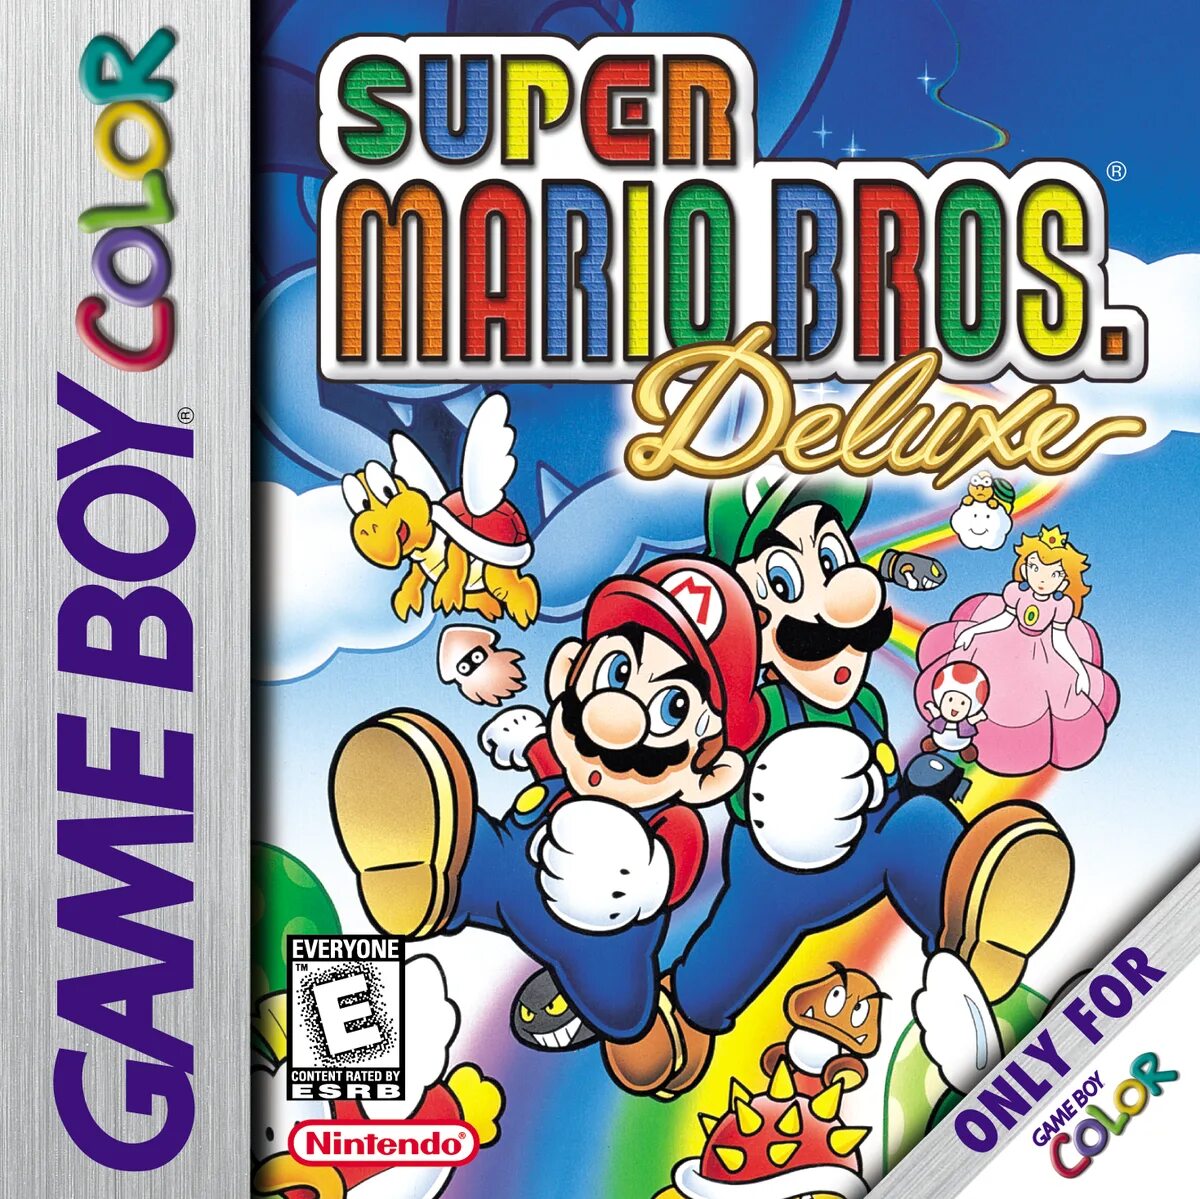 Mario deluxe nintendo. Супер Марио БРОС Делюкс геймбой. Super Mario Bros Deluxe game boy Color. Super Mario Bros Deluxe GBC. Super Mario Bros 1985 Nintendo.